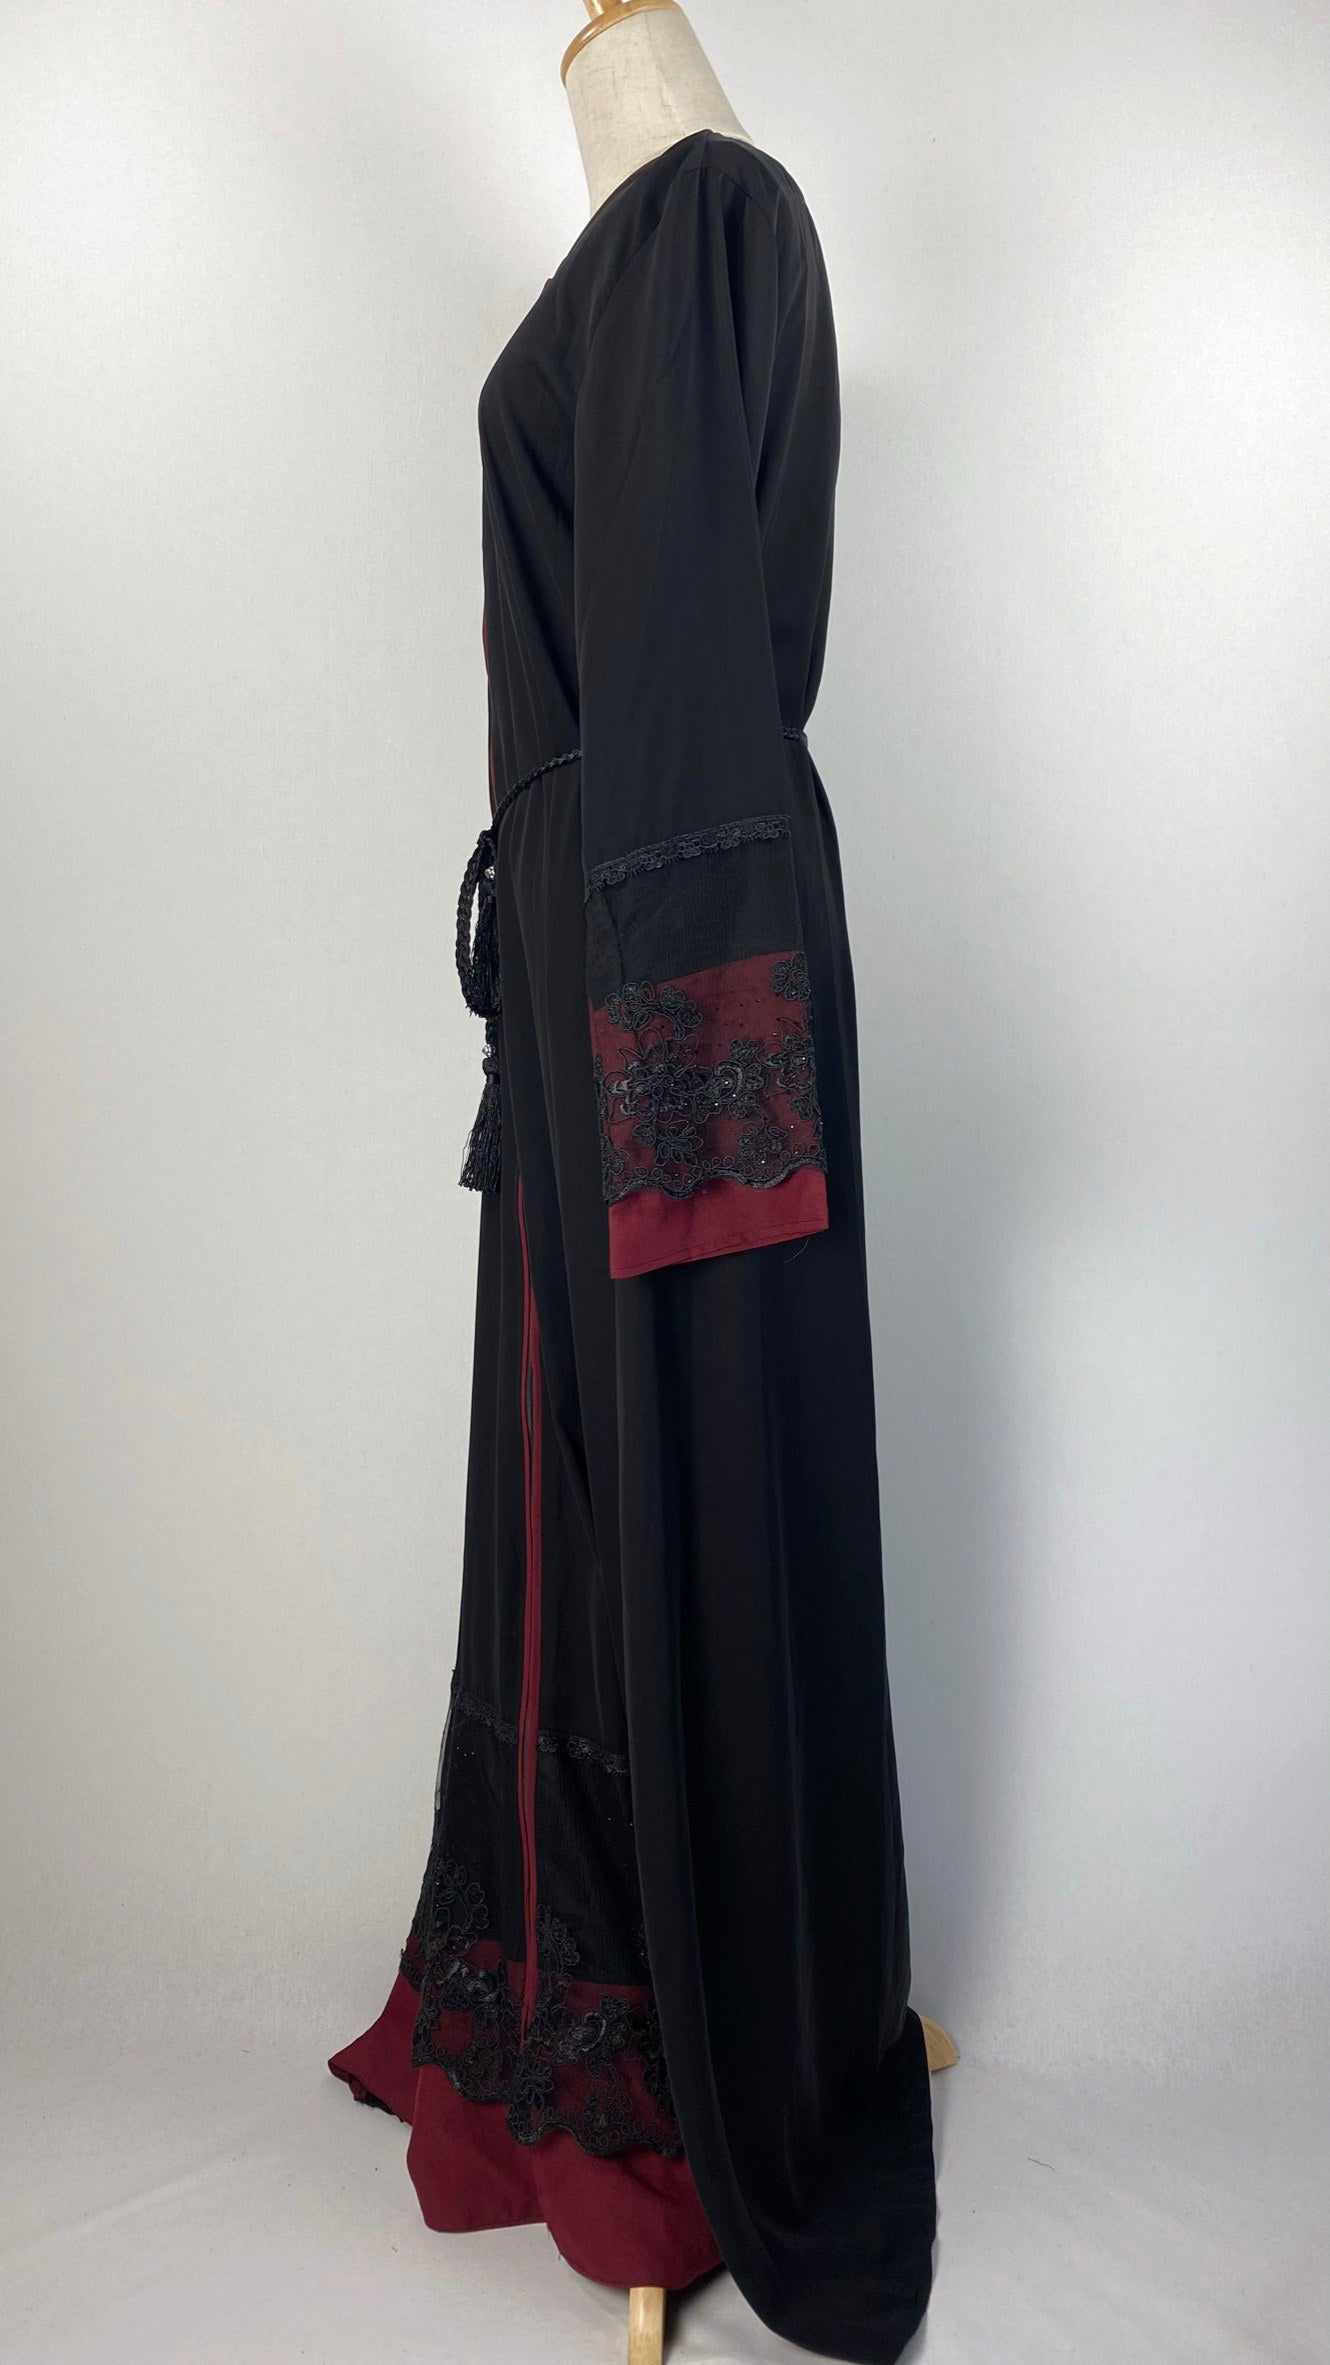 Long Sleeve Zip Up Abaya with Maroon Detail, Black